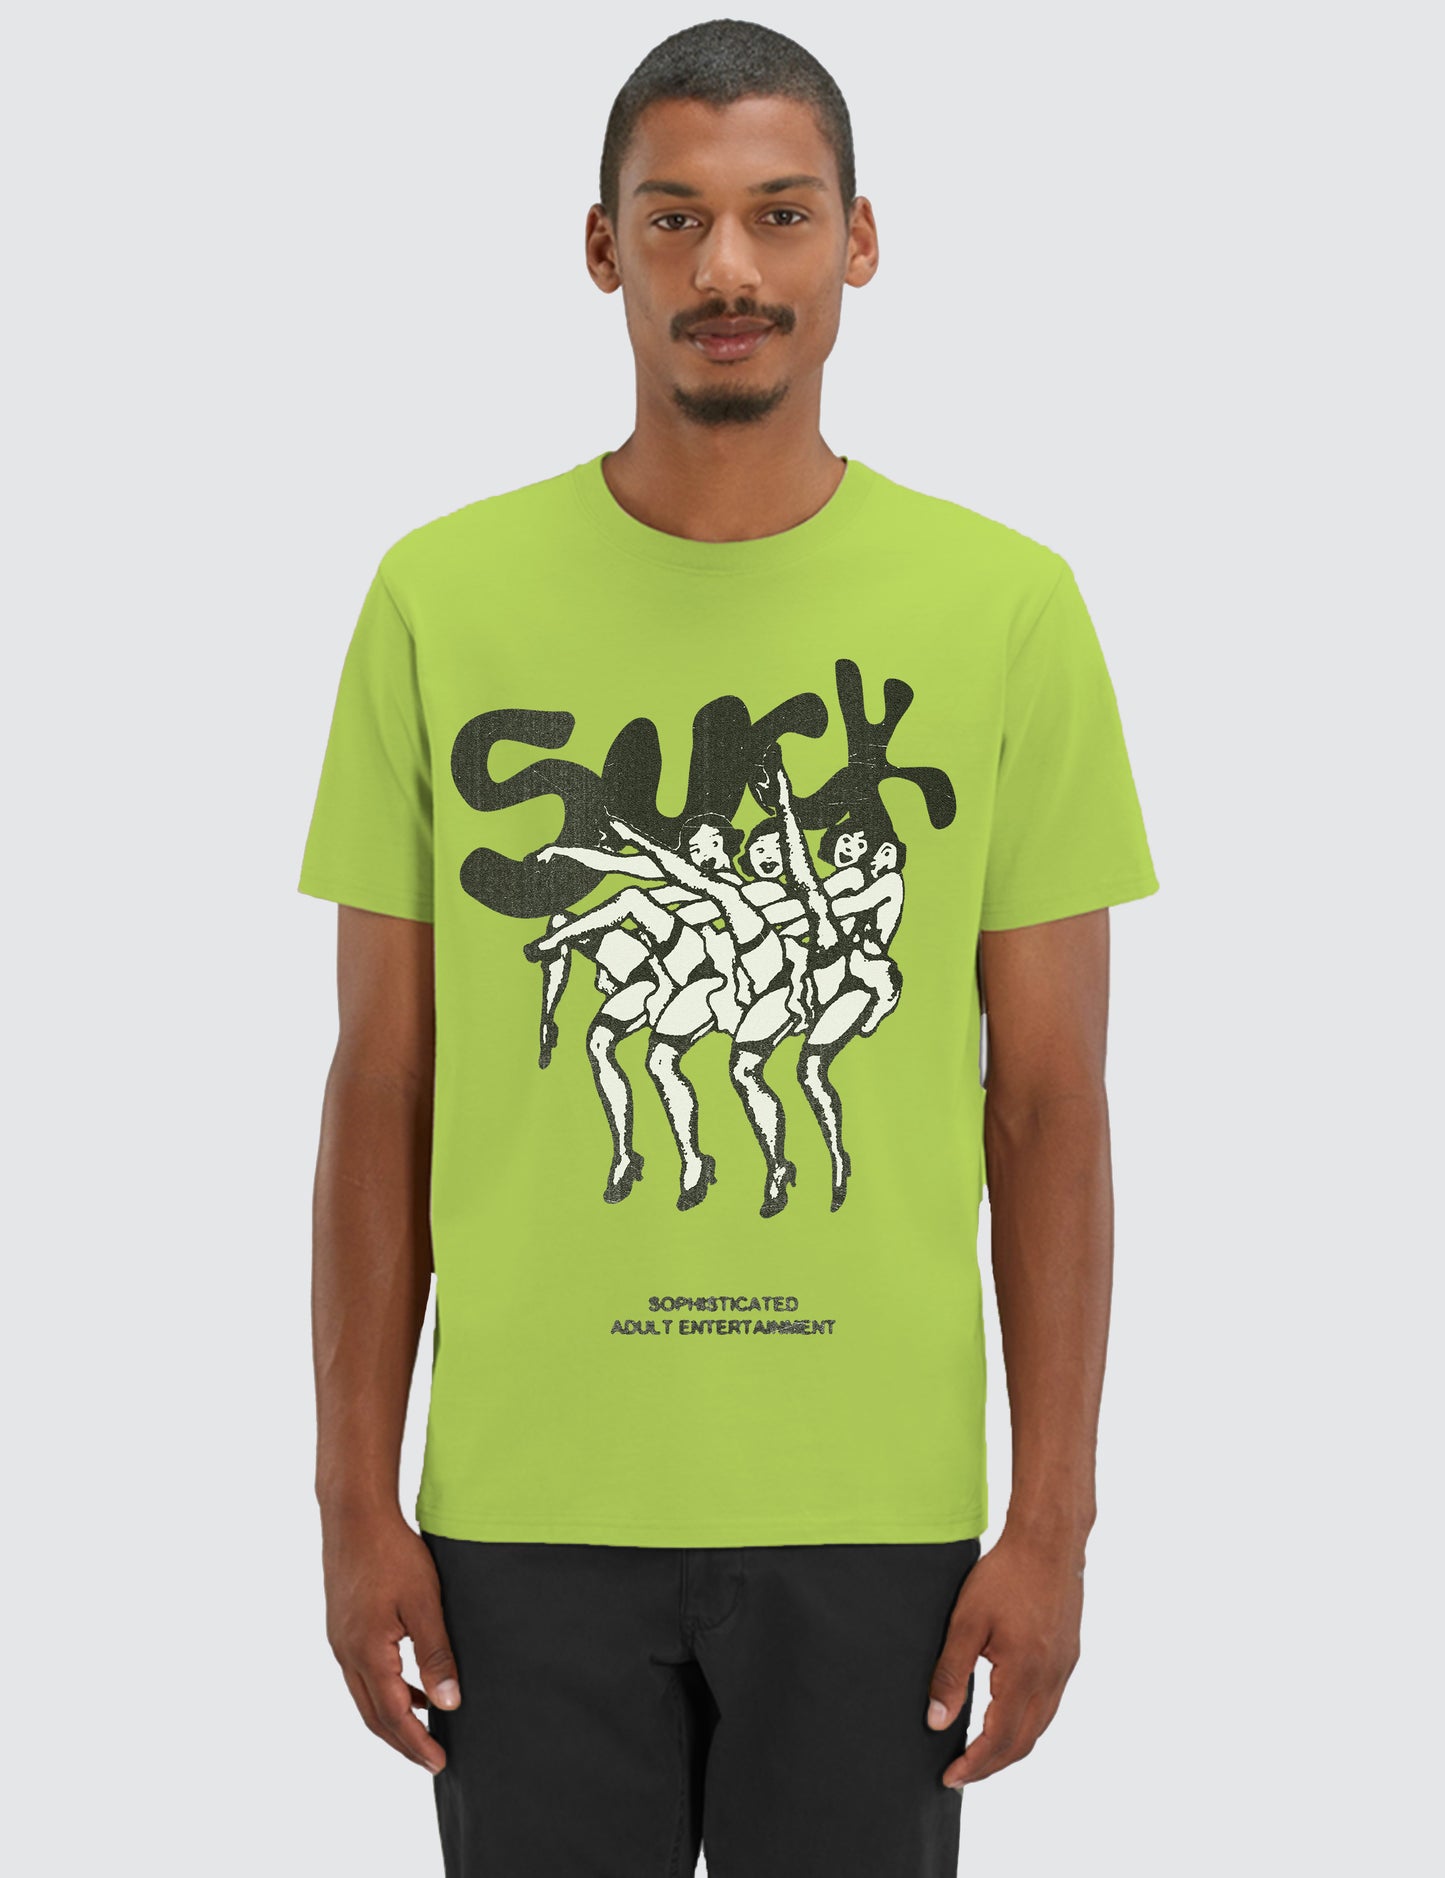 Adult Entertainment T-Shirt (Lime)